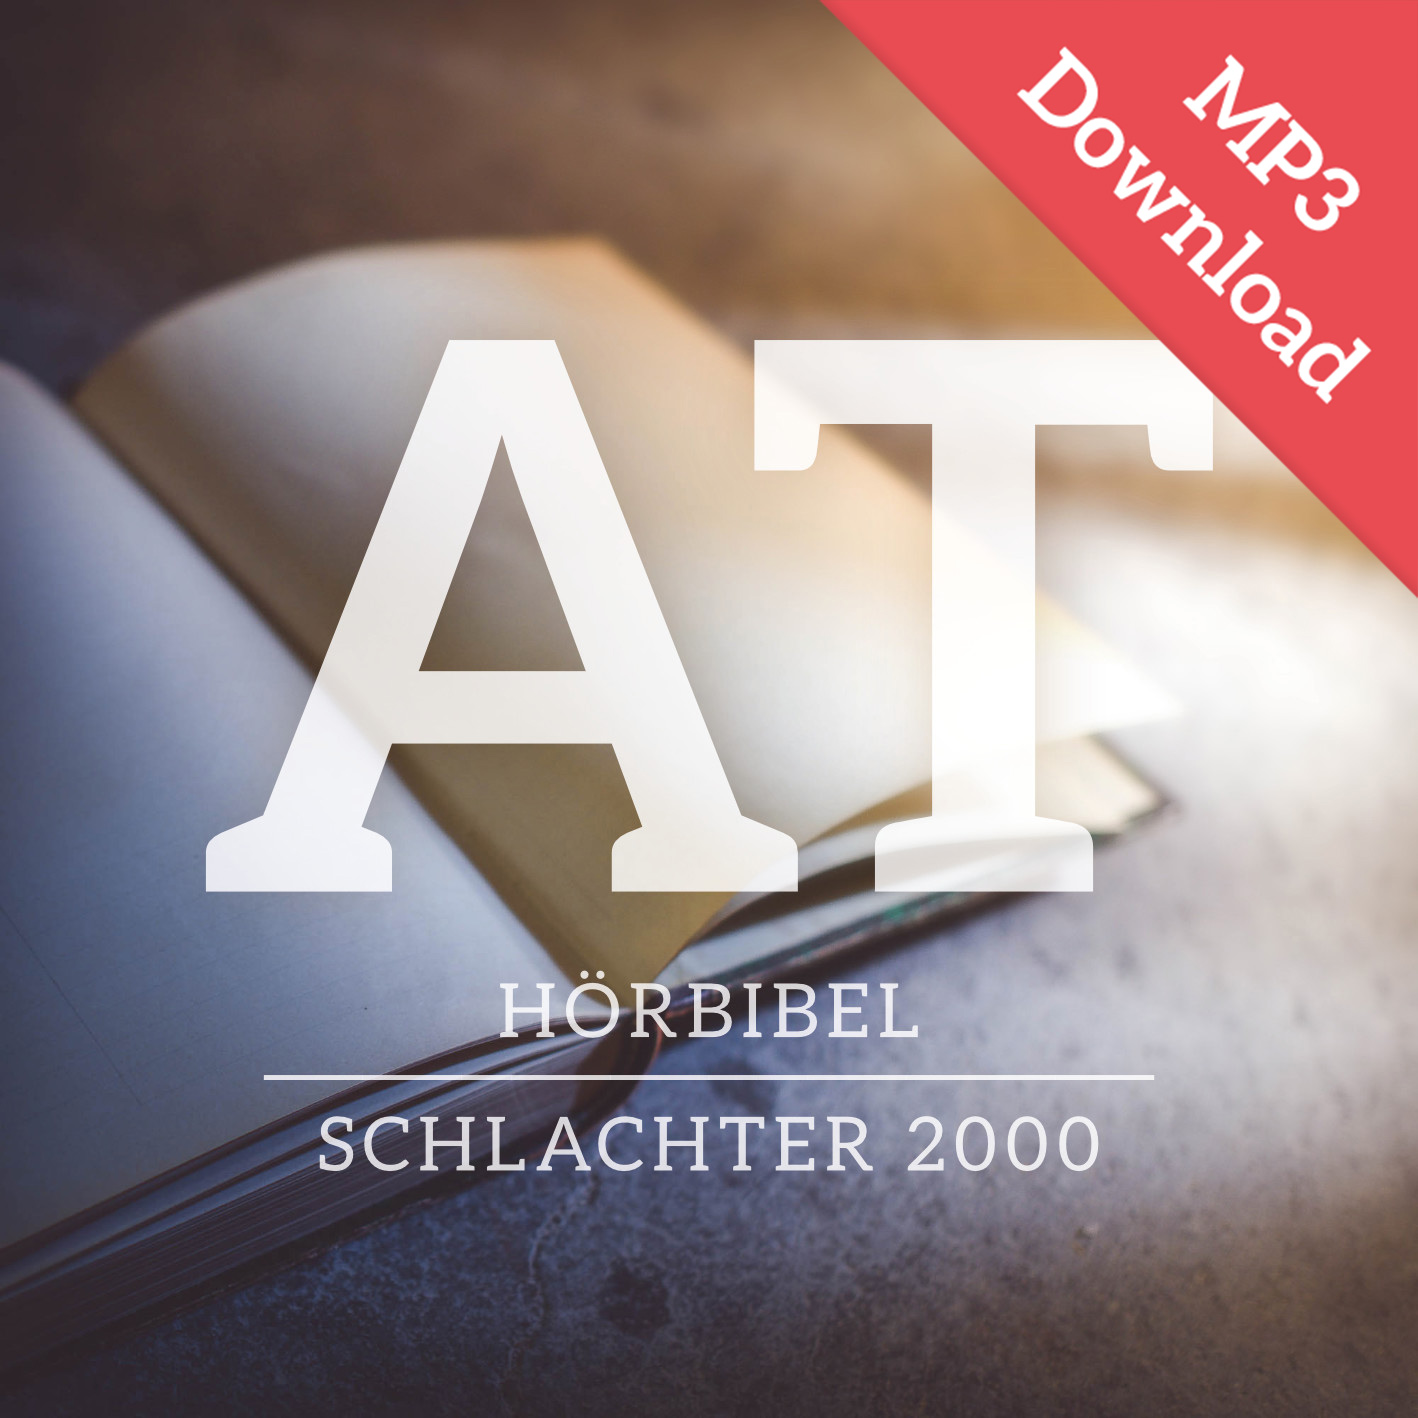 DOWNLOAD: Schlachter 2000 - Altes Testament - MP3 - Hörbibel